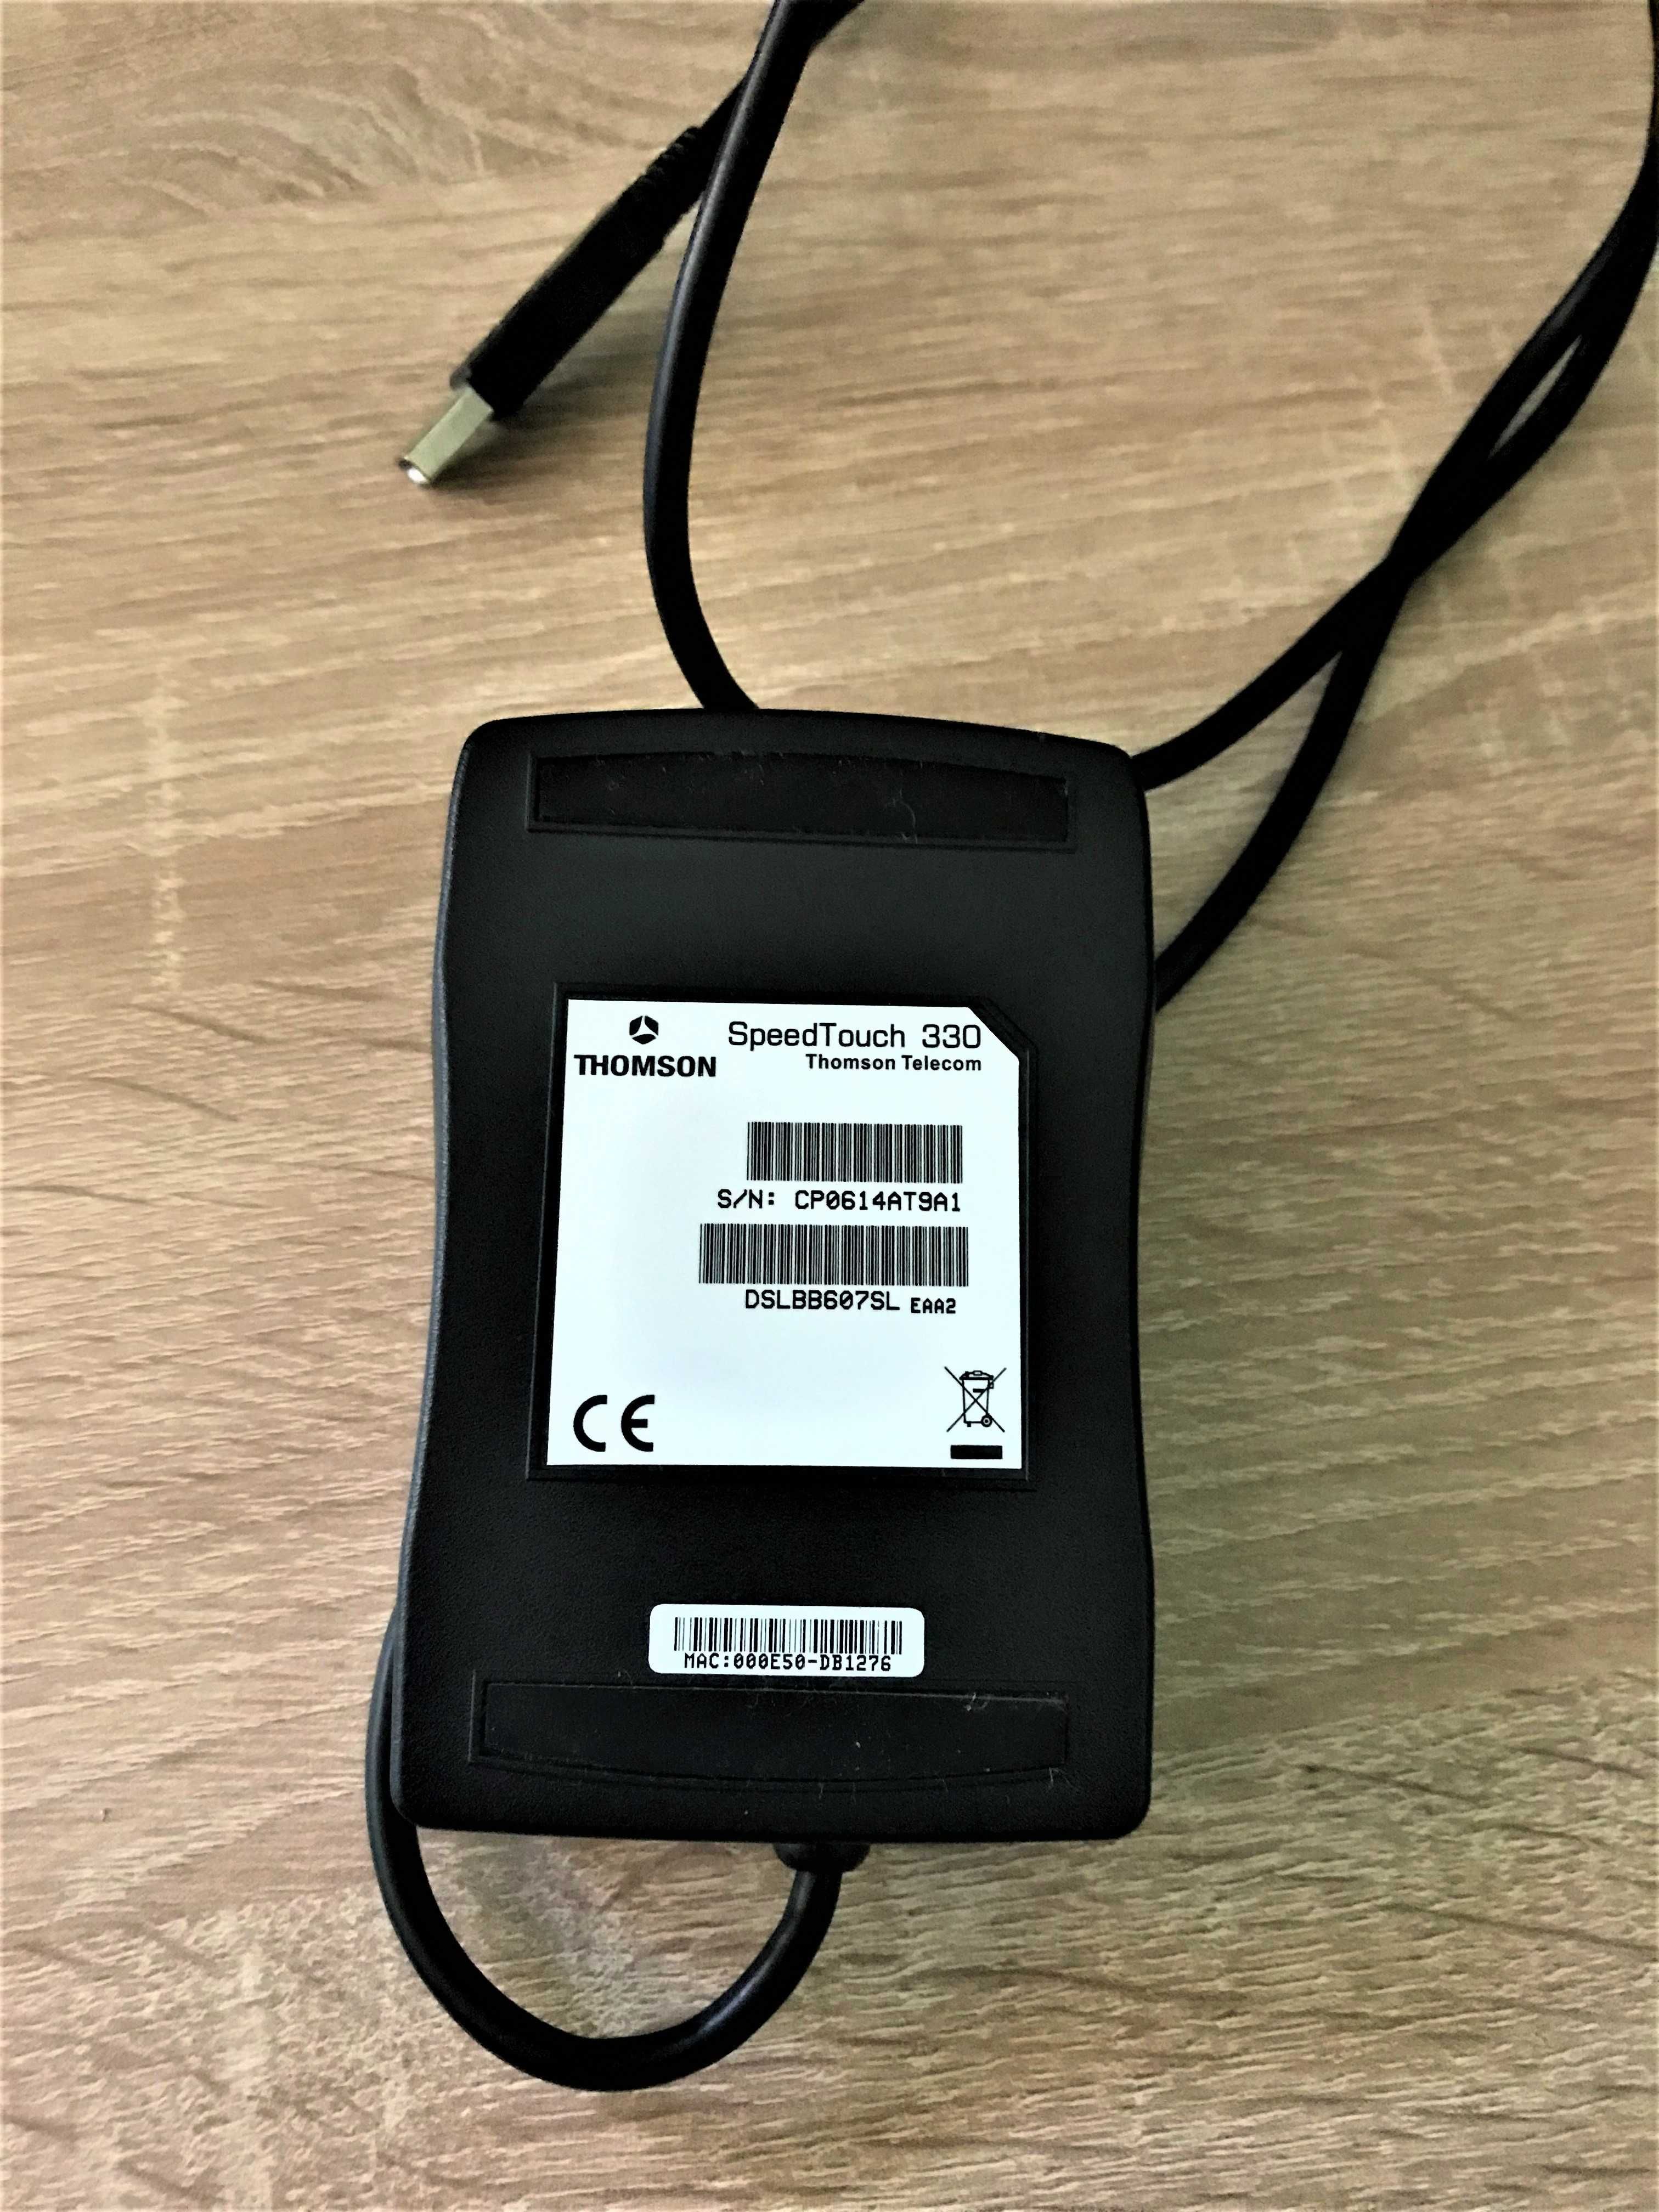 Modem Thomson Speedtouch 330 USB ADSL